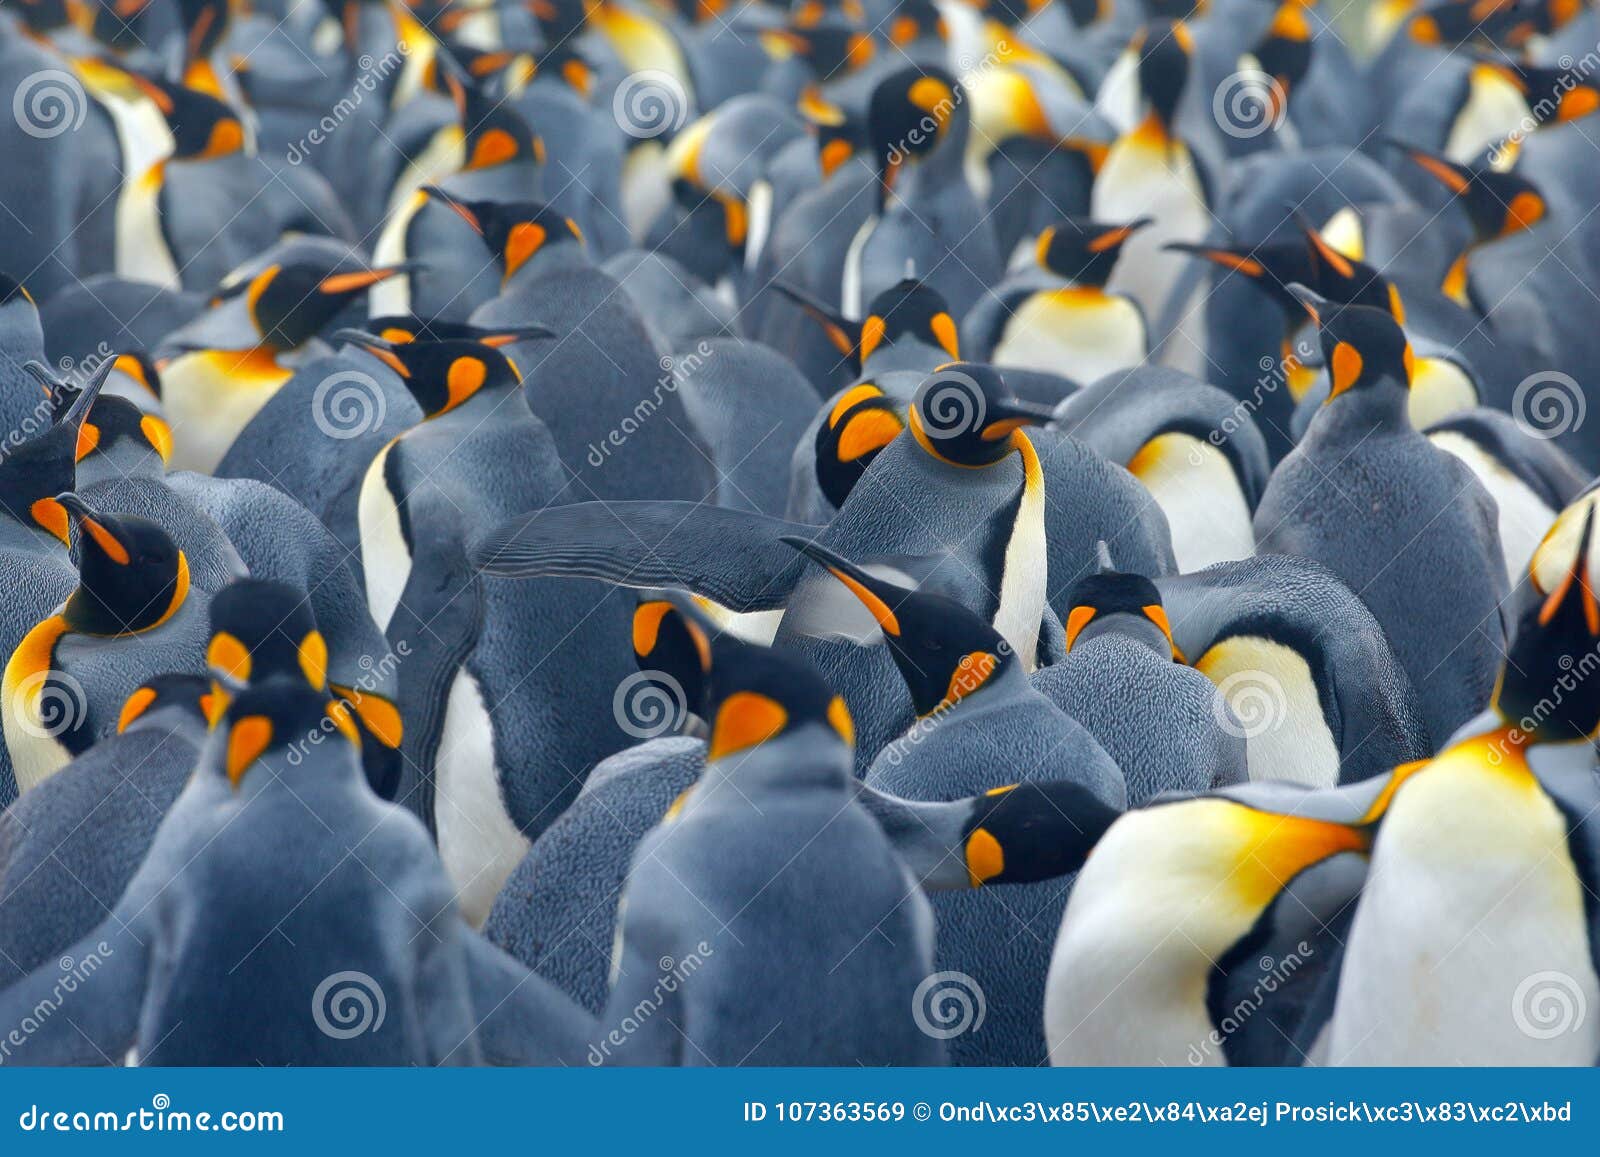 king penguin colony. many birds together, in falkland islands. wildlife scene from nature. animal behaviour in antarctica. penguin